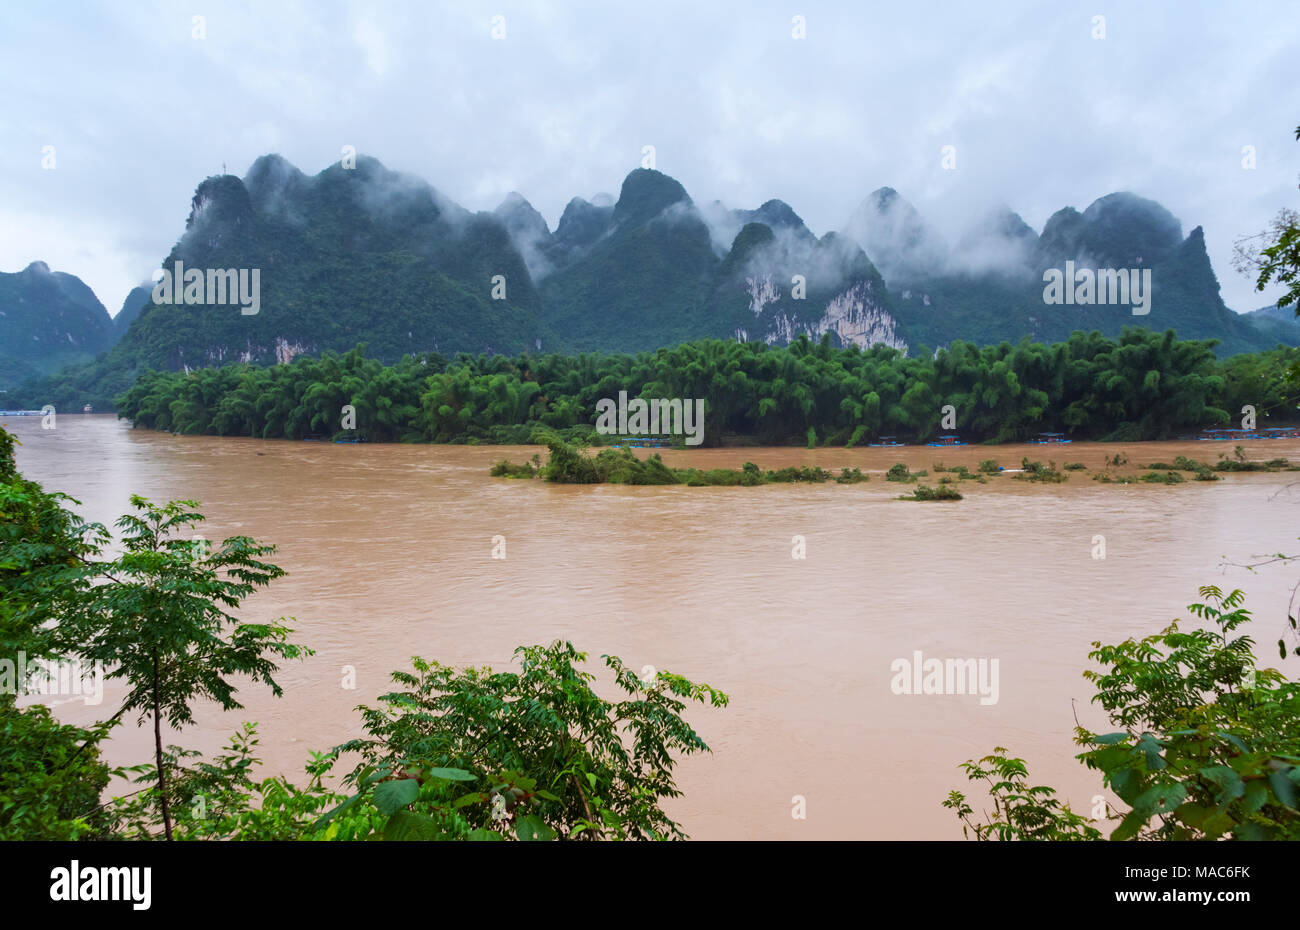 Li Fluss und Kalkstein Hügel im Nebel, Guilin, Guangxi, China Stockfoto